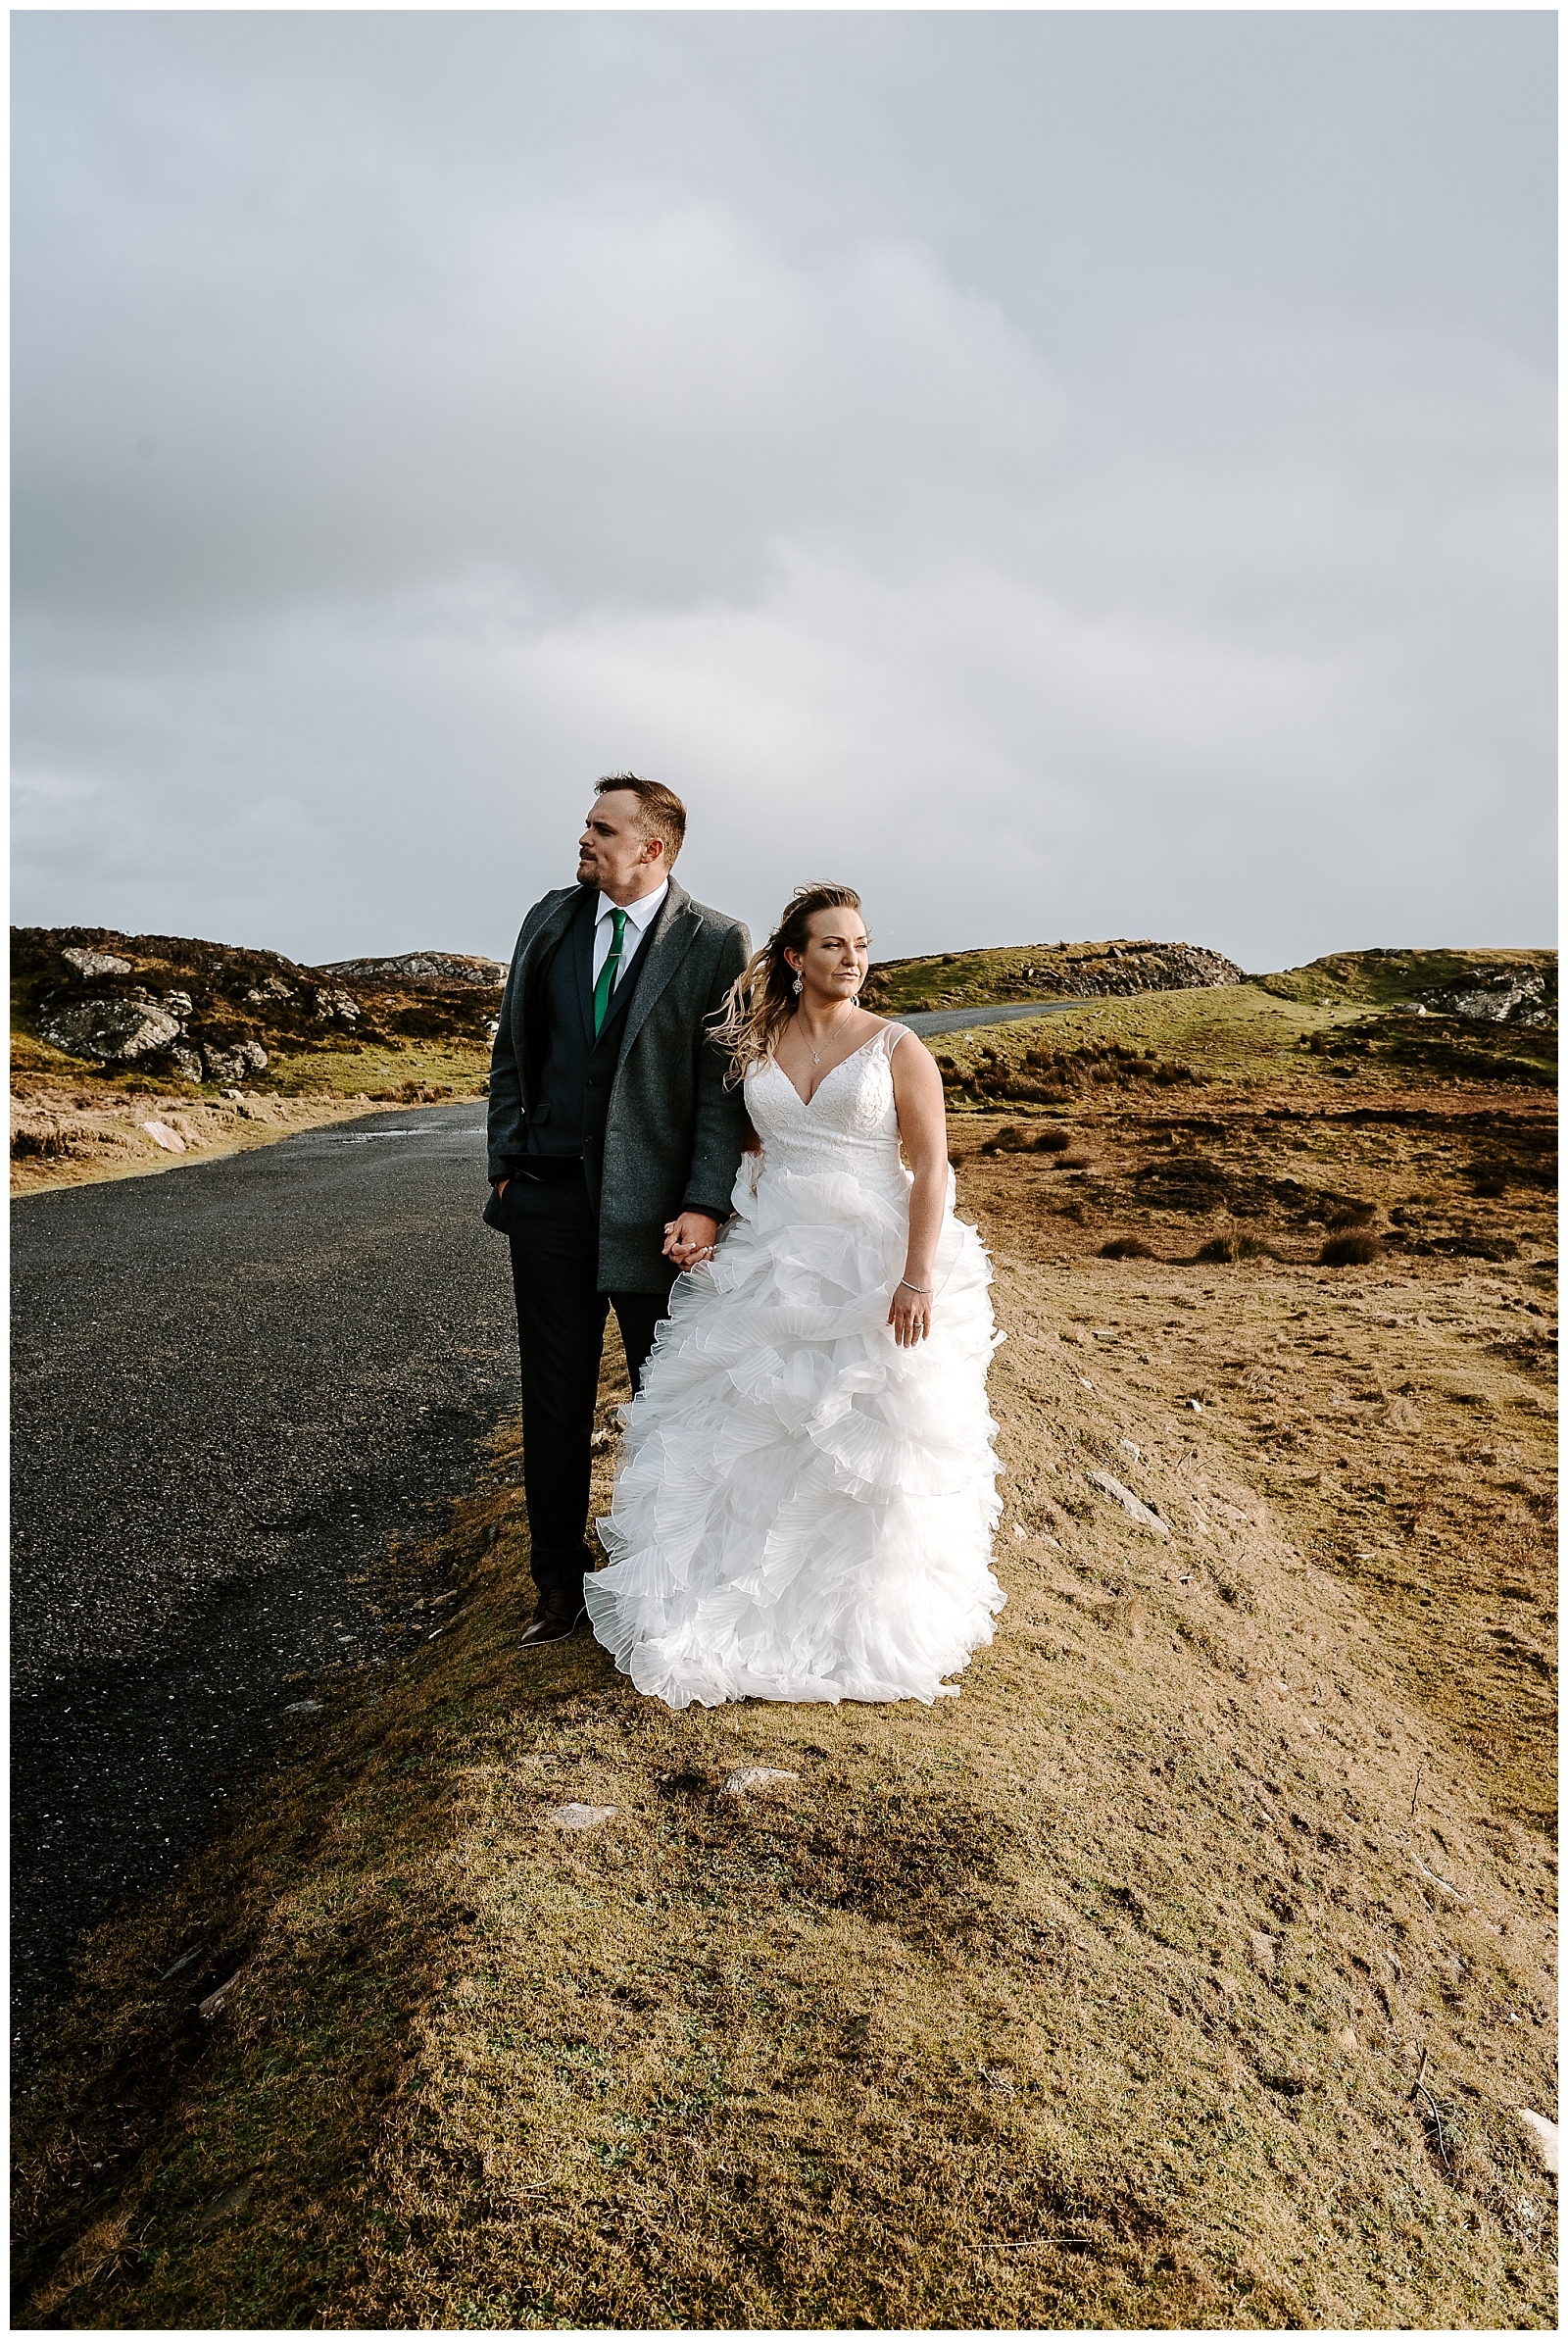 adventurous couple eloping in Ireland along the coast